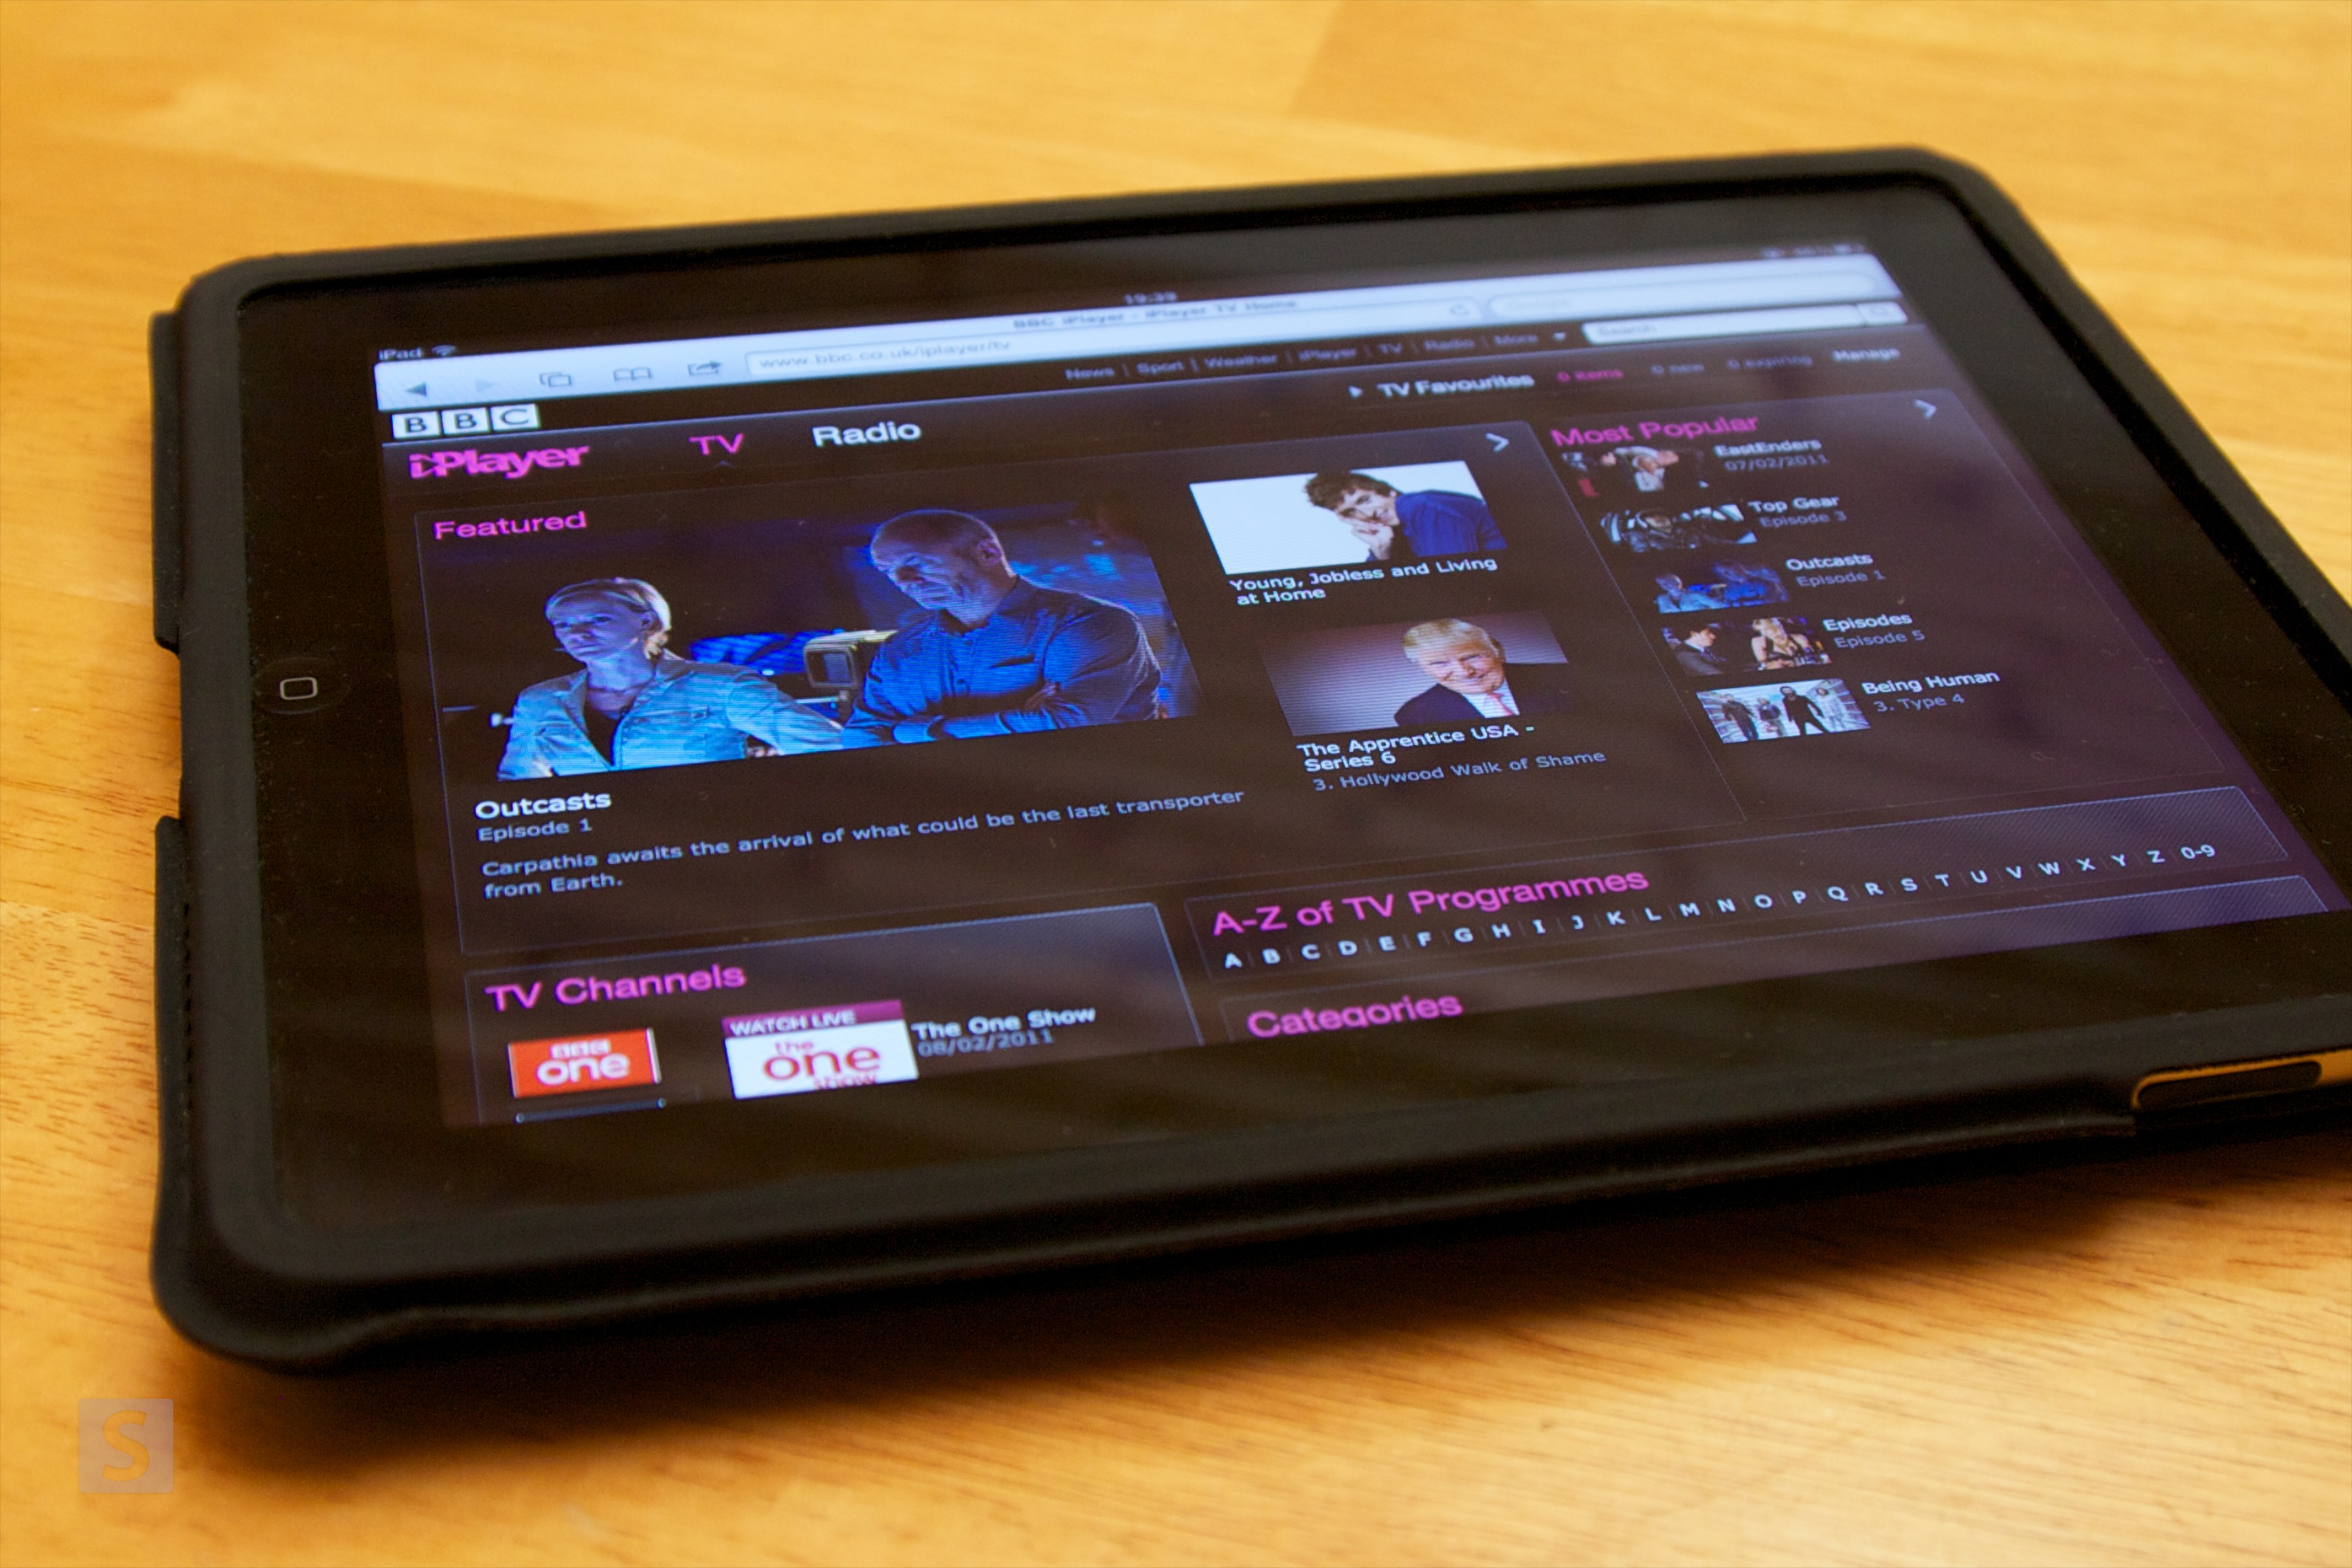 BBC iPlayer on the iPad